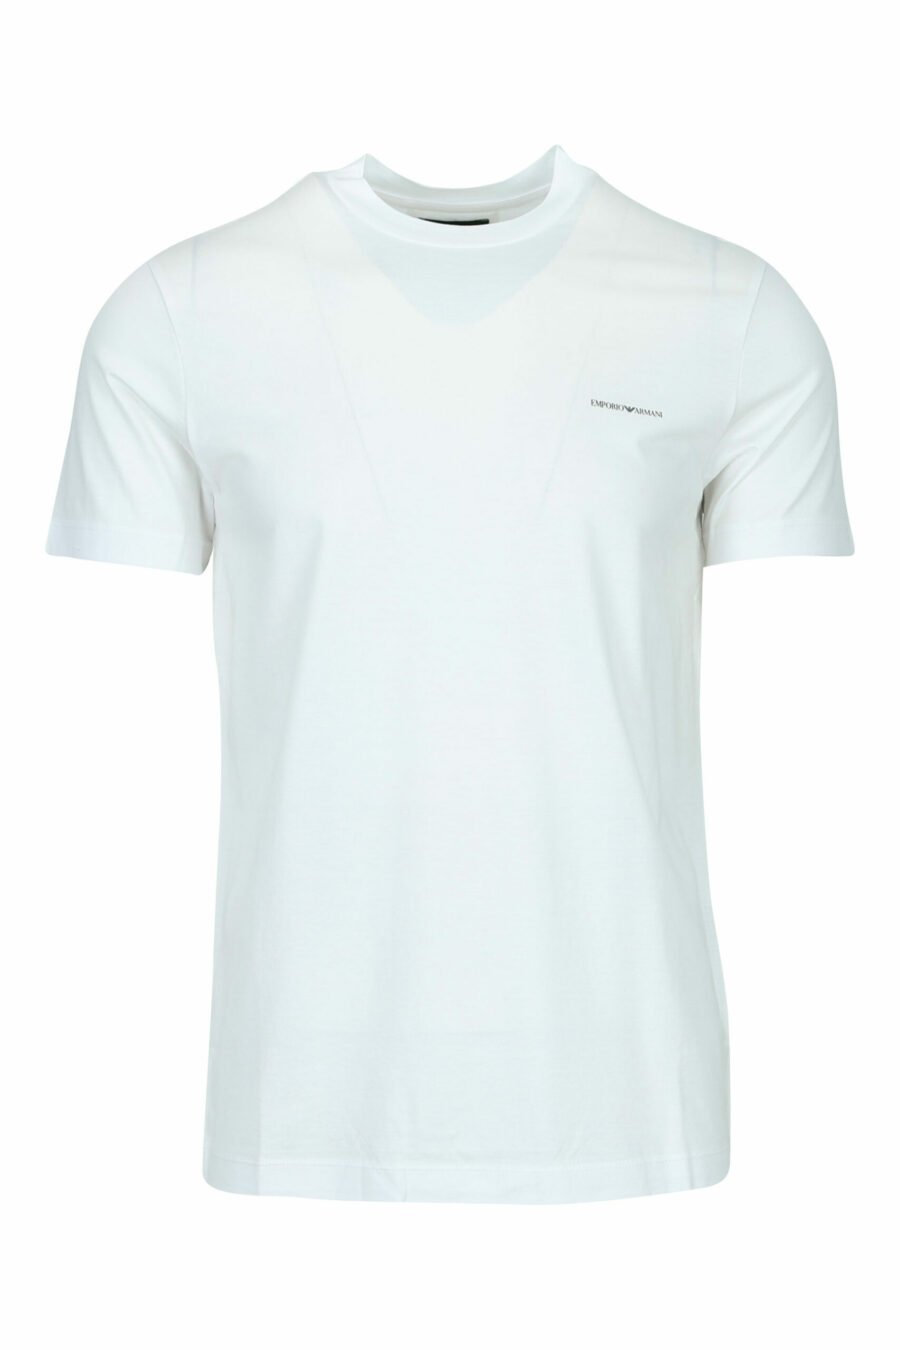 T-shirt blanc avec minilogo "emporio" - 8059516200147 échelles